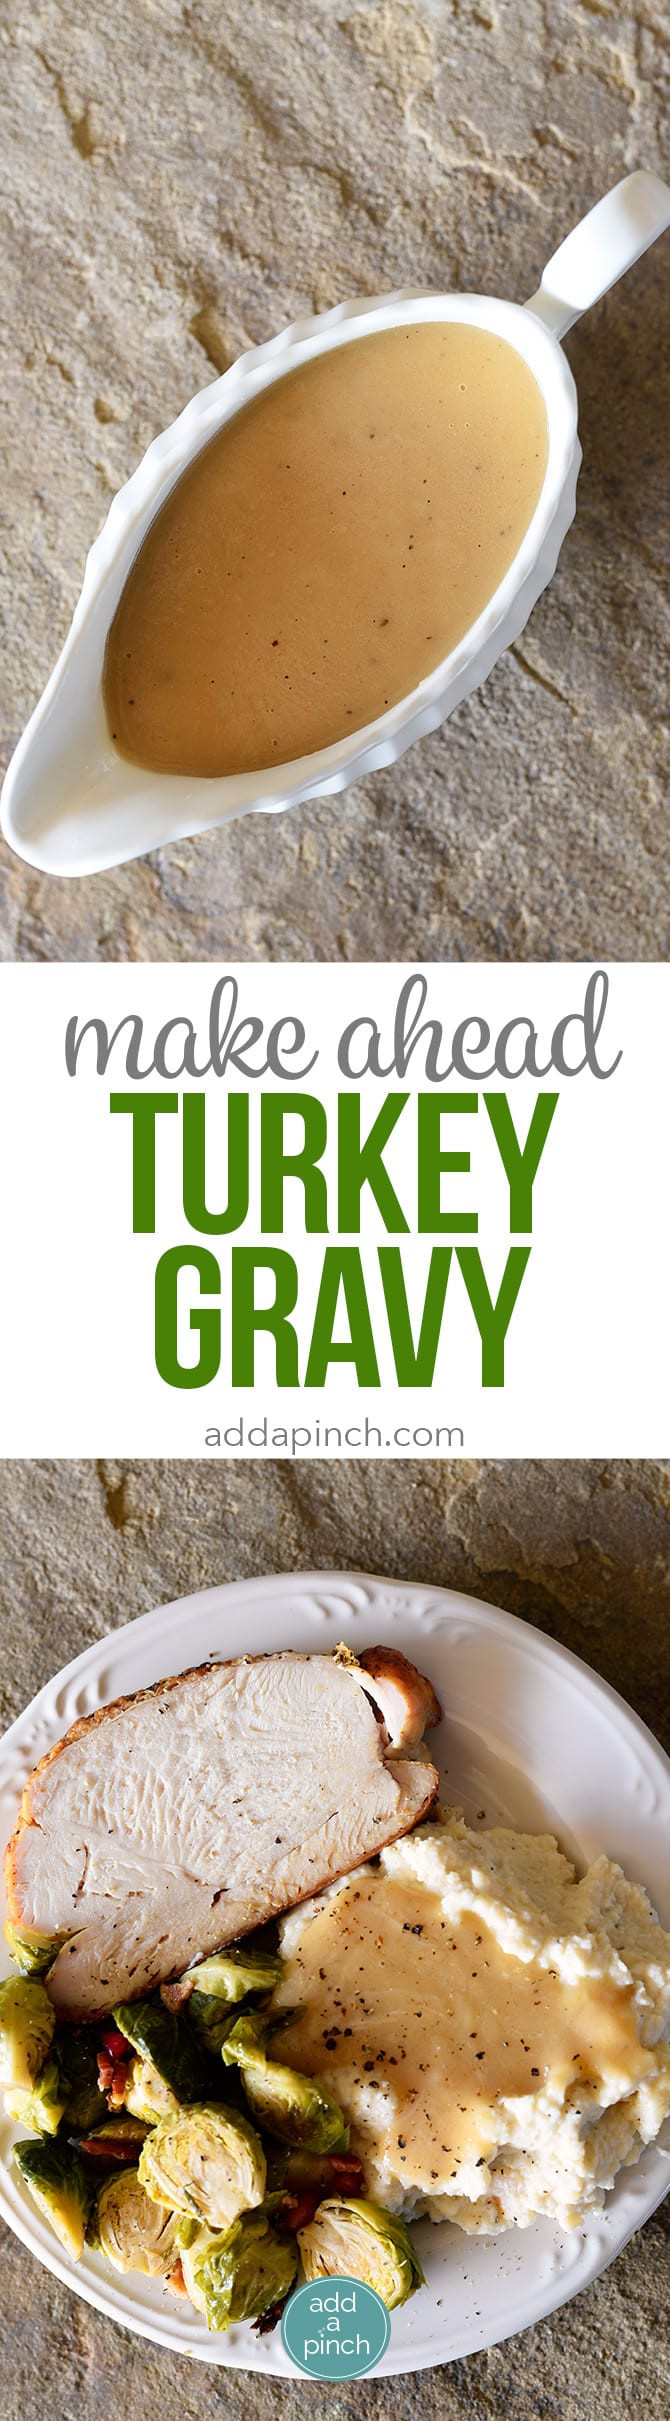 Make Turkey Gravy
 Make Ahead Turkey Gravy Recipe Add a Pinch